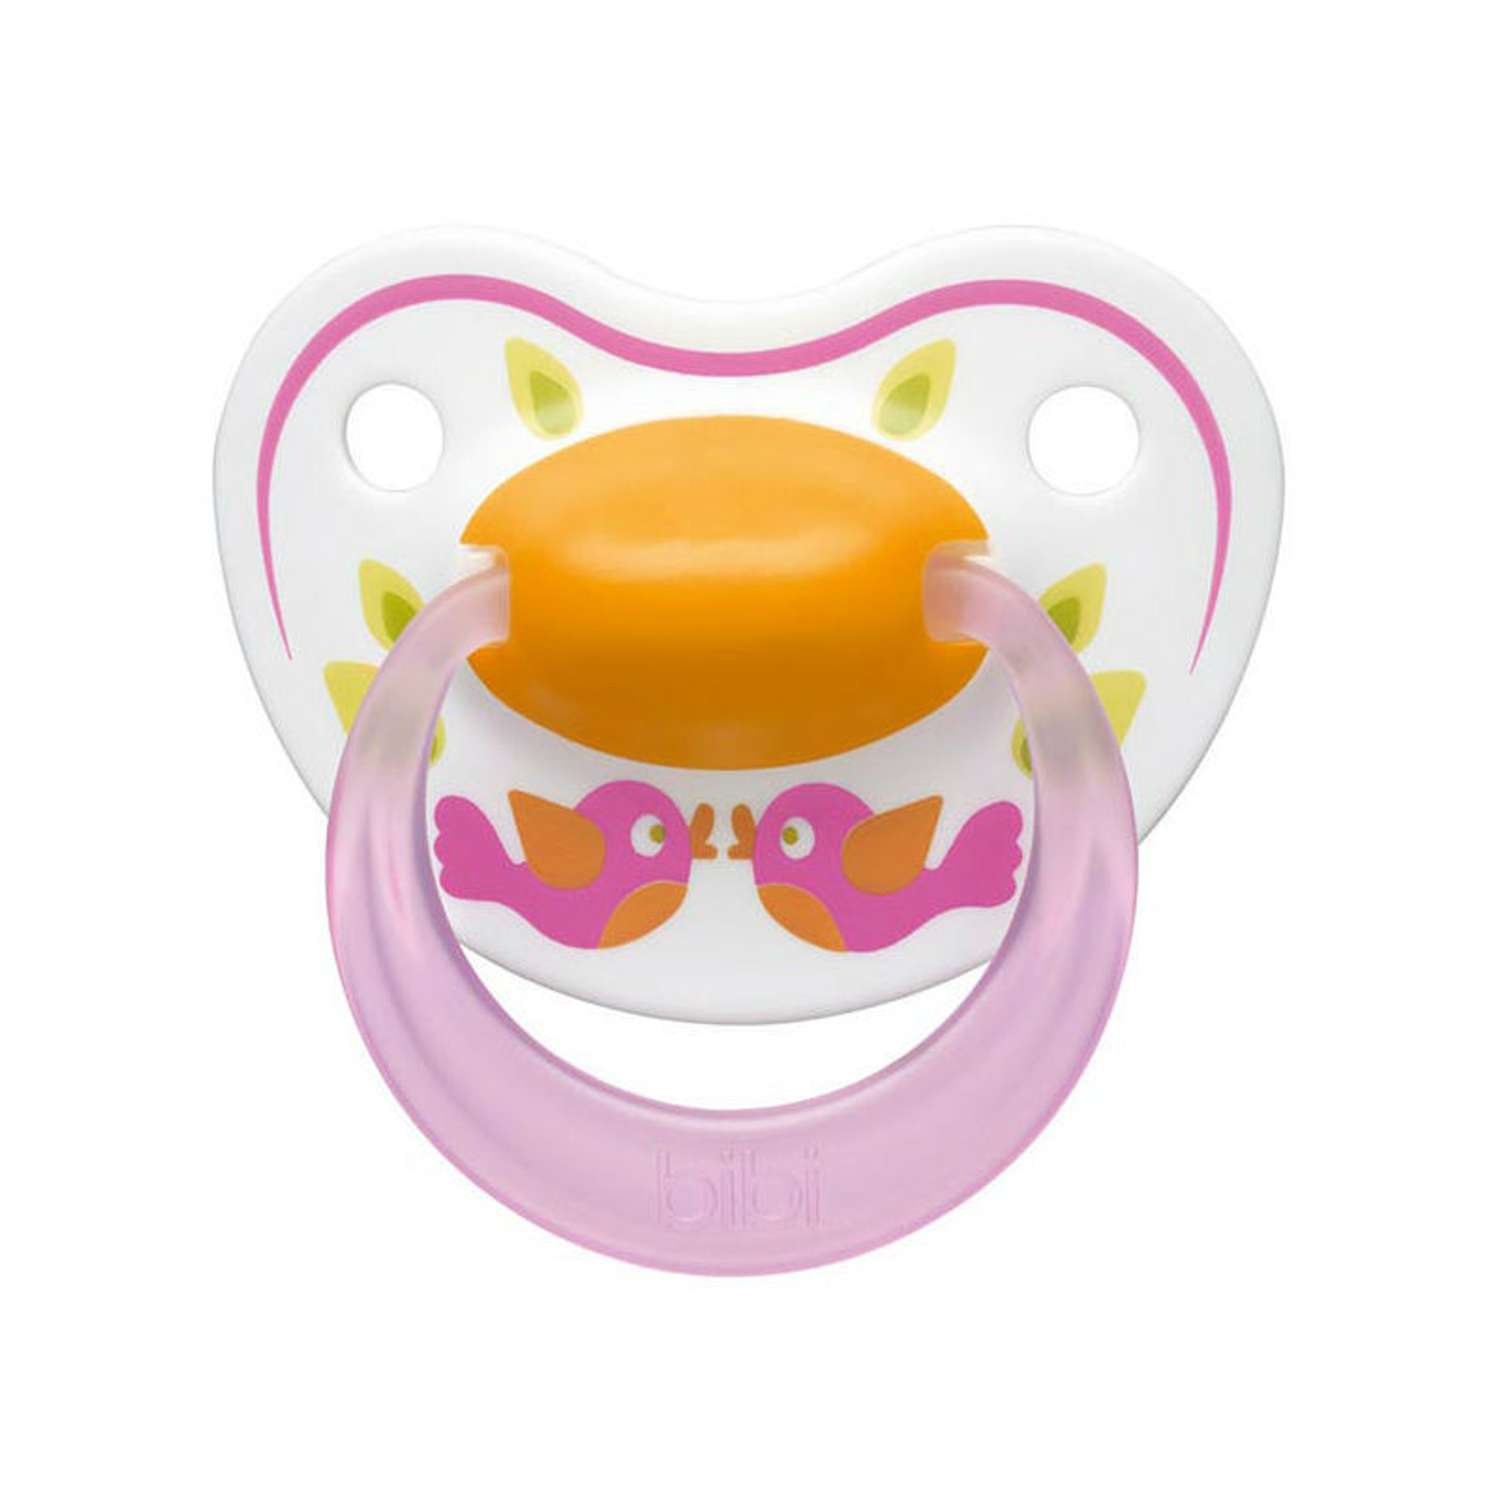 Пустышка Bibi Premium Dental силикон 0-6 мес Happiness PlayWithUs в ассортименте - фото 2